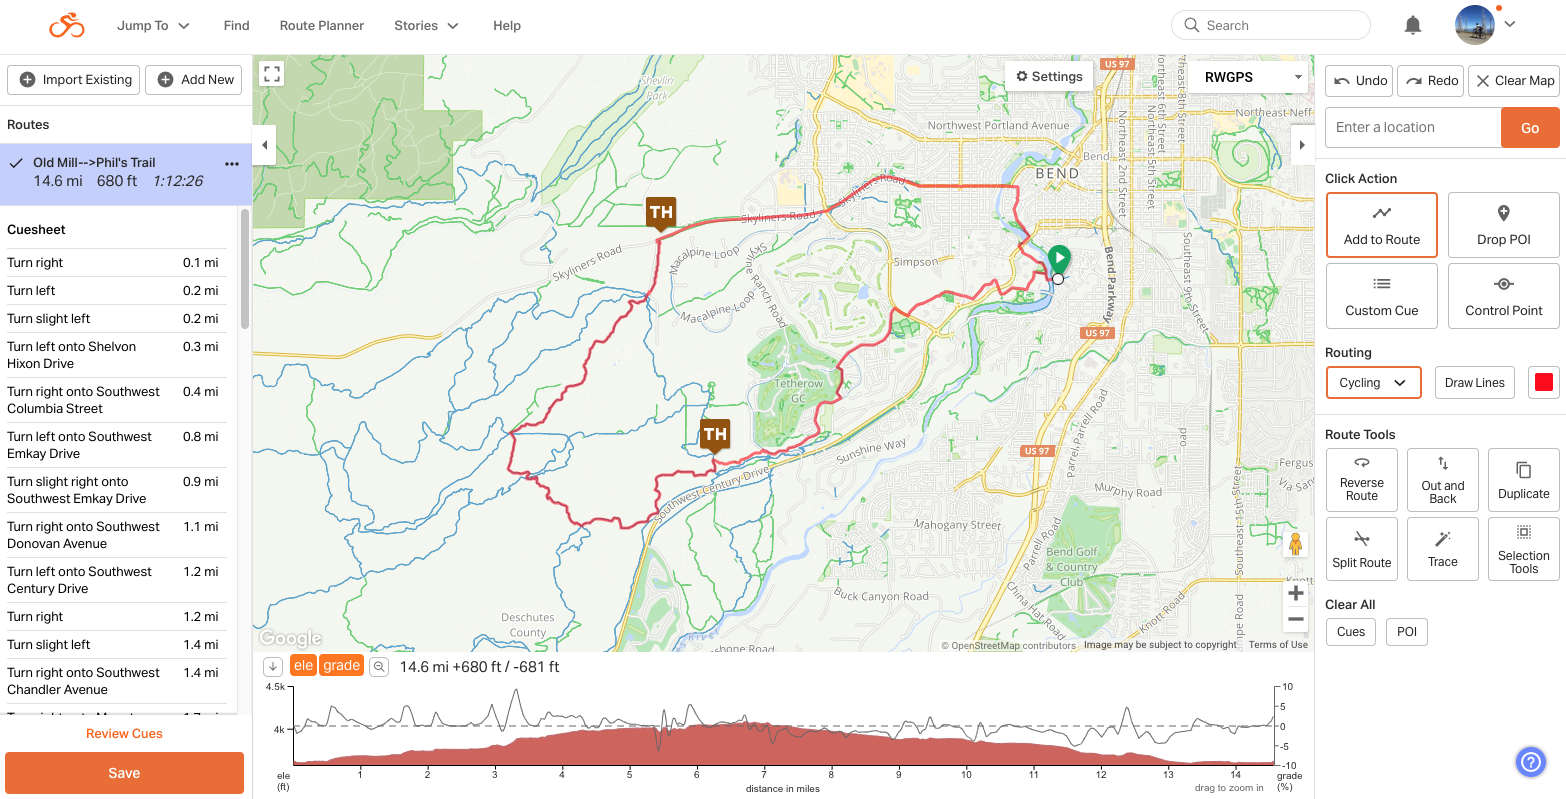 Regnskab klæde sig ud Faderlig About the Bike Route Planner - Ride with GPS